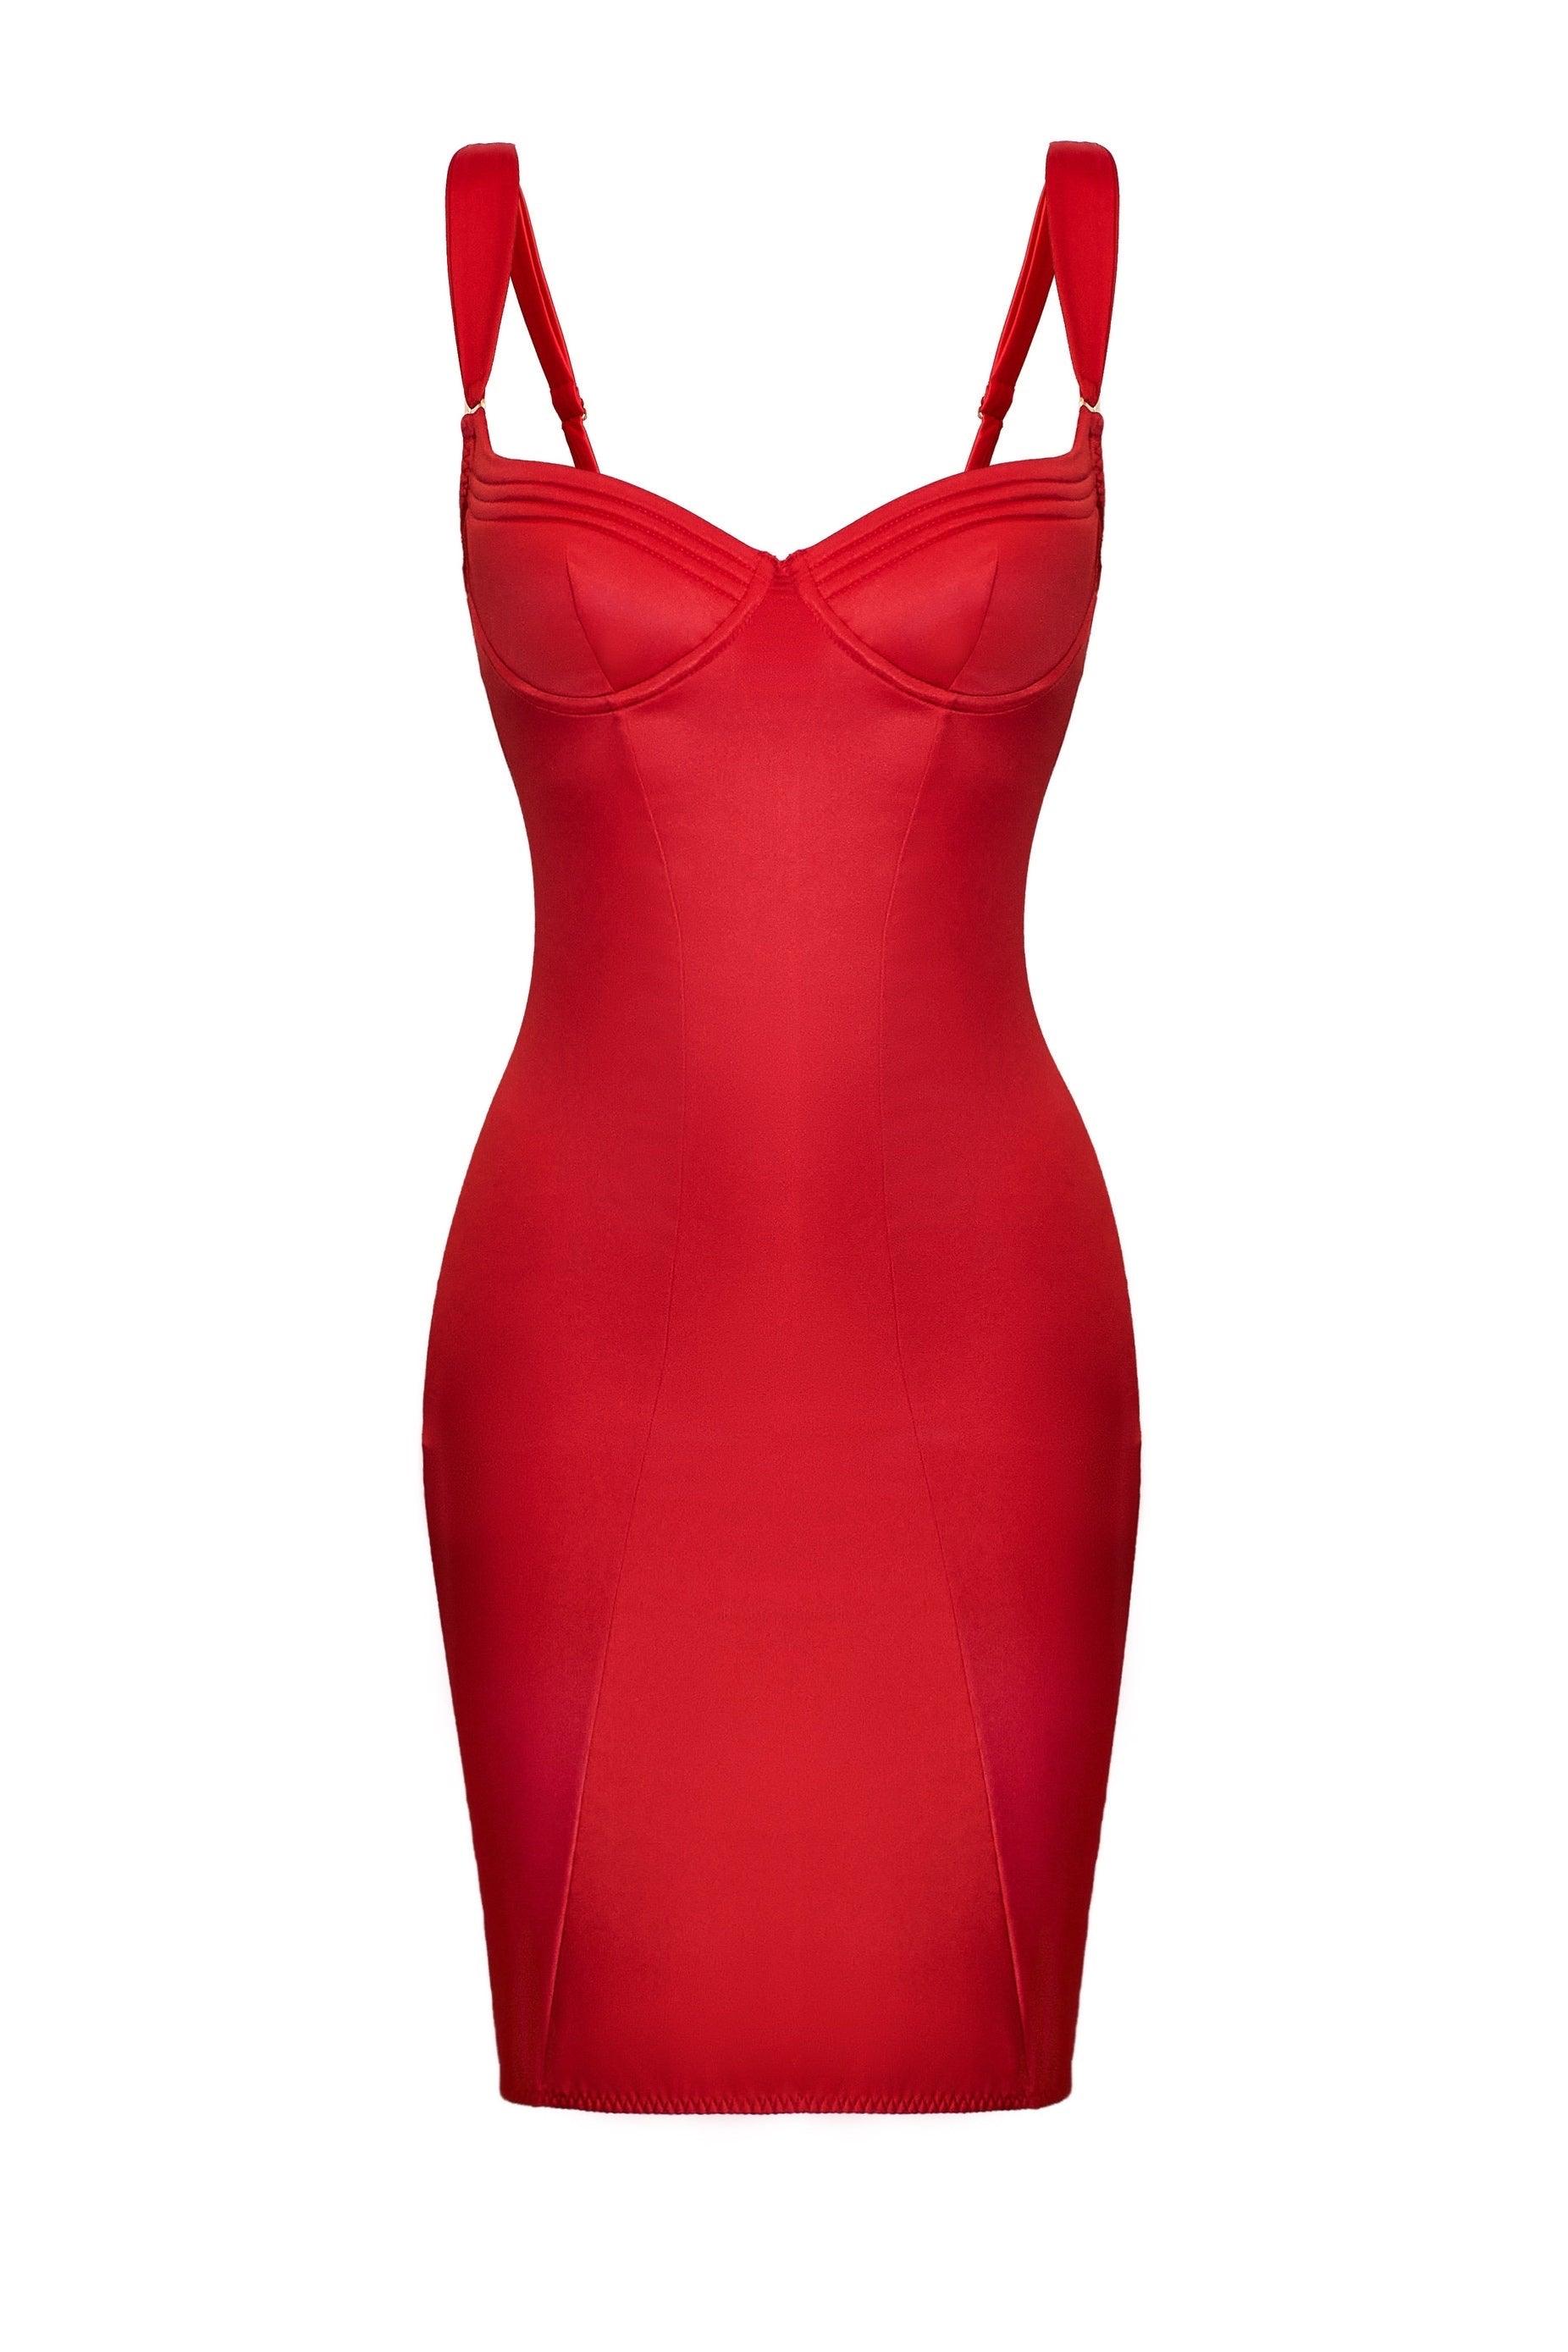 Cymothoe Red dress - yesUndress